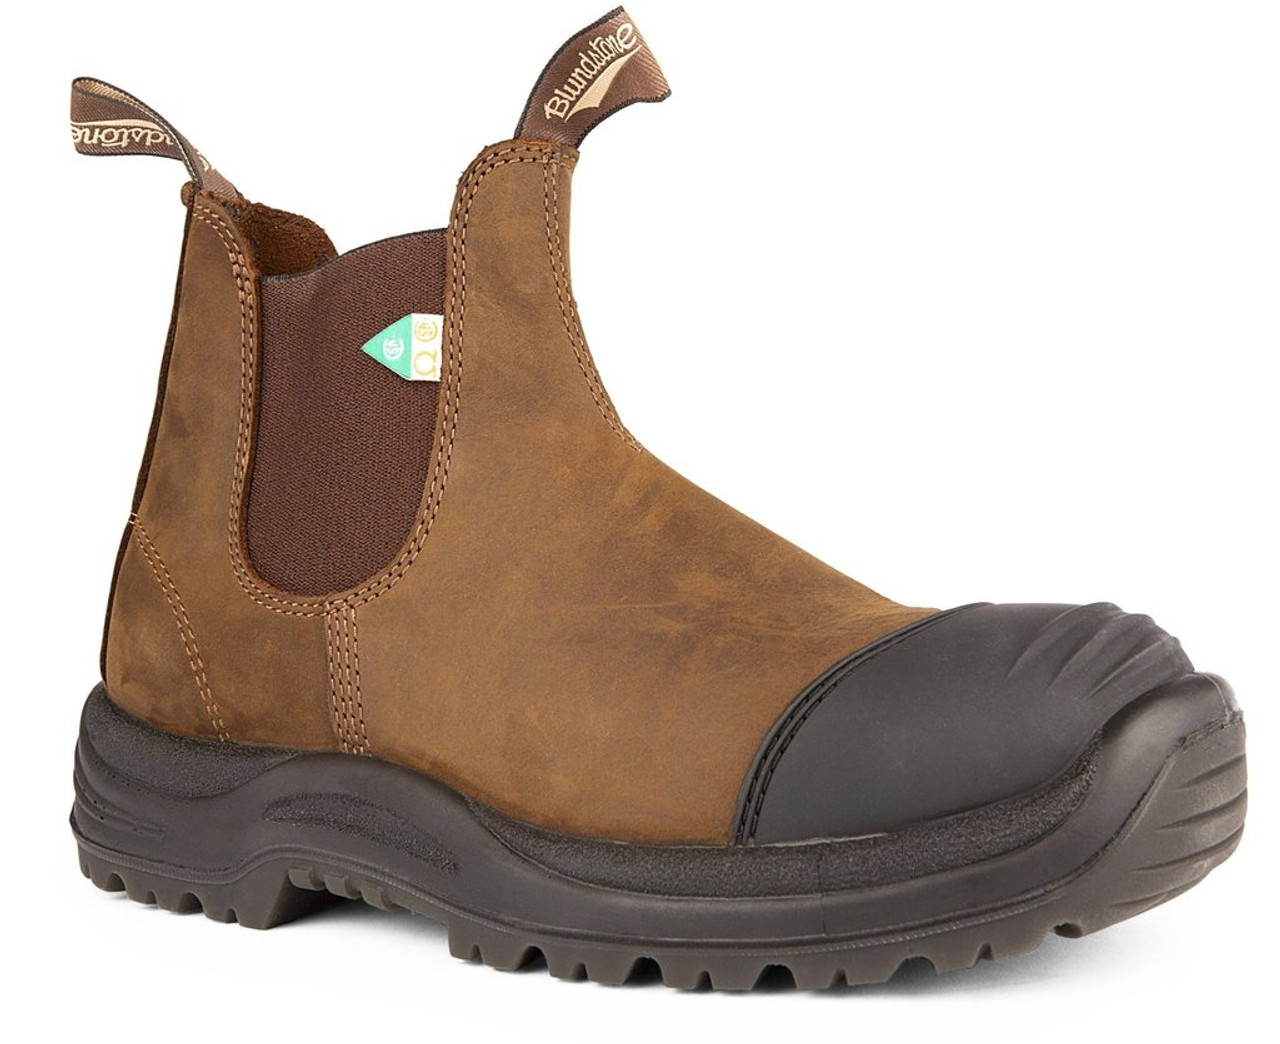 blundstone wellington boots